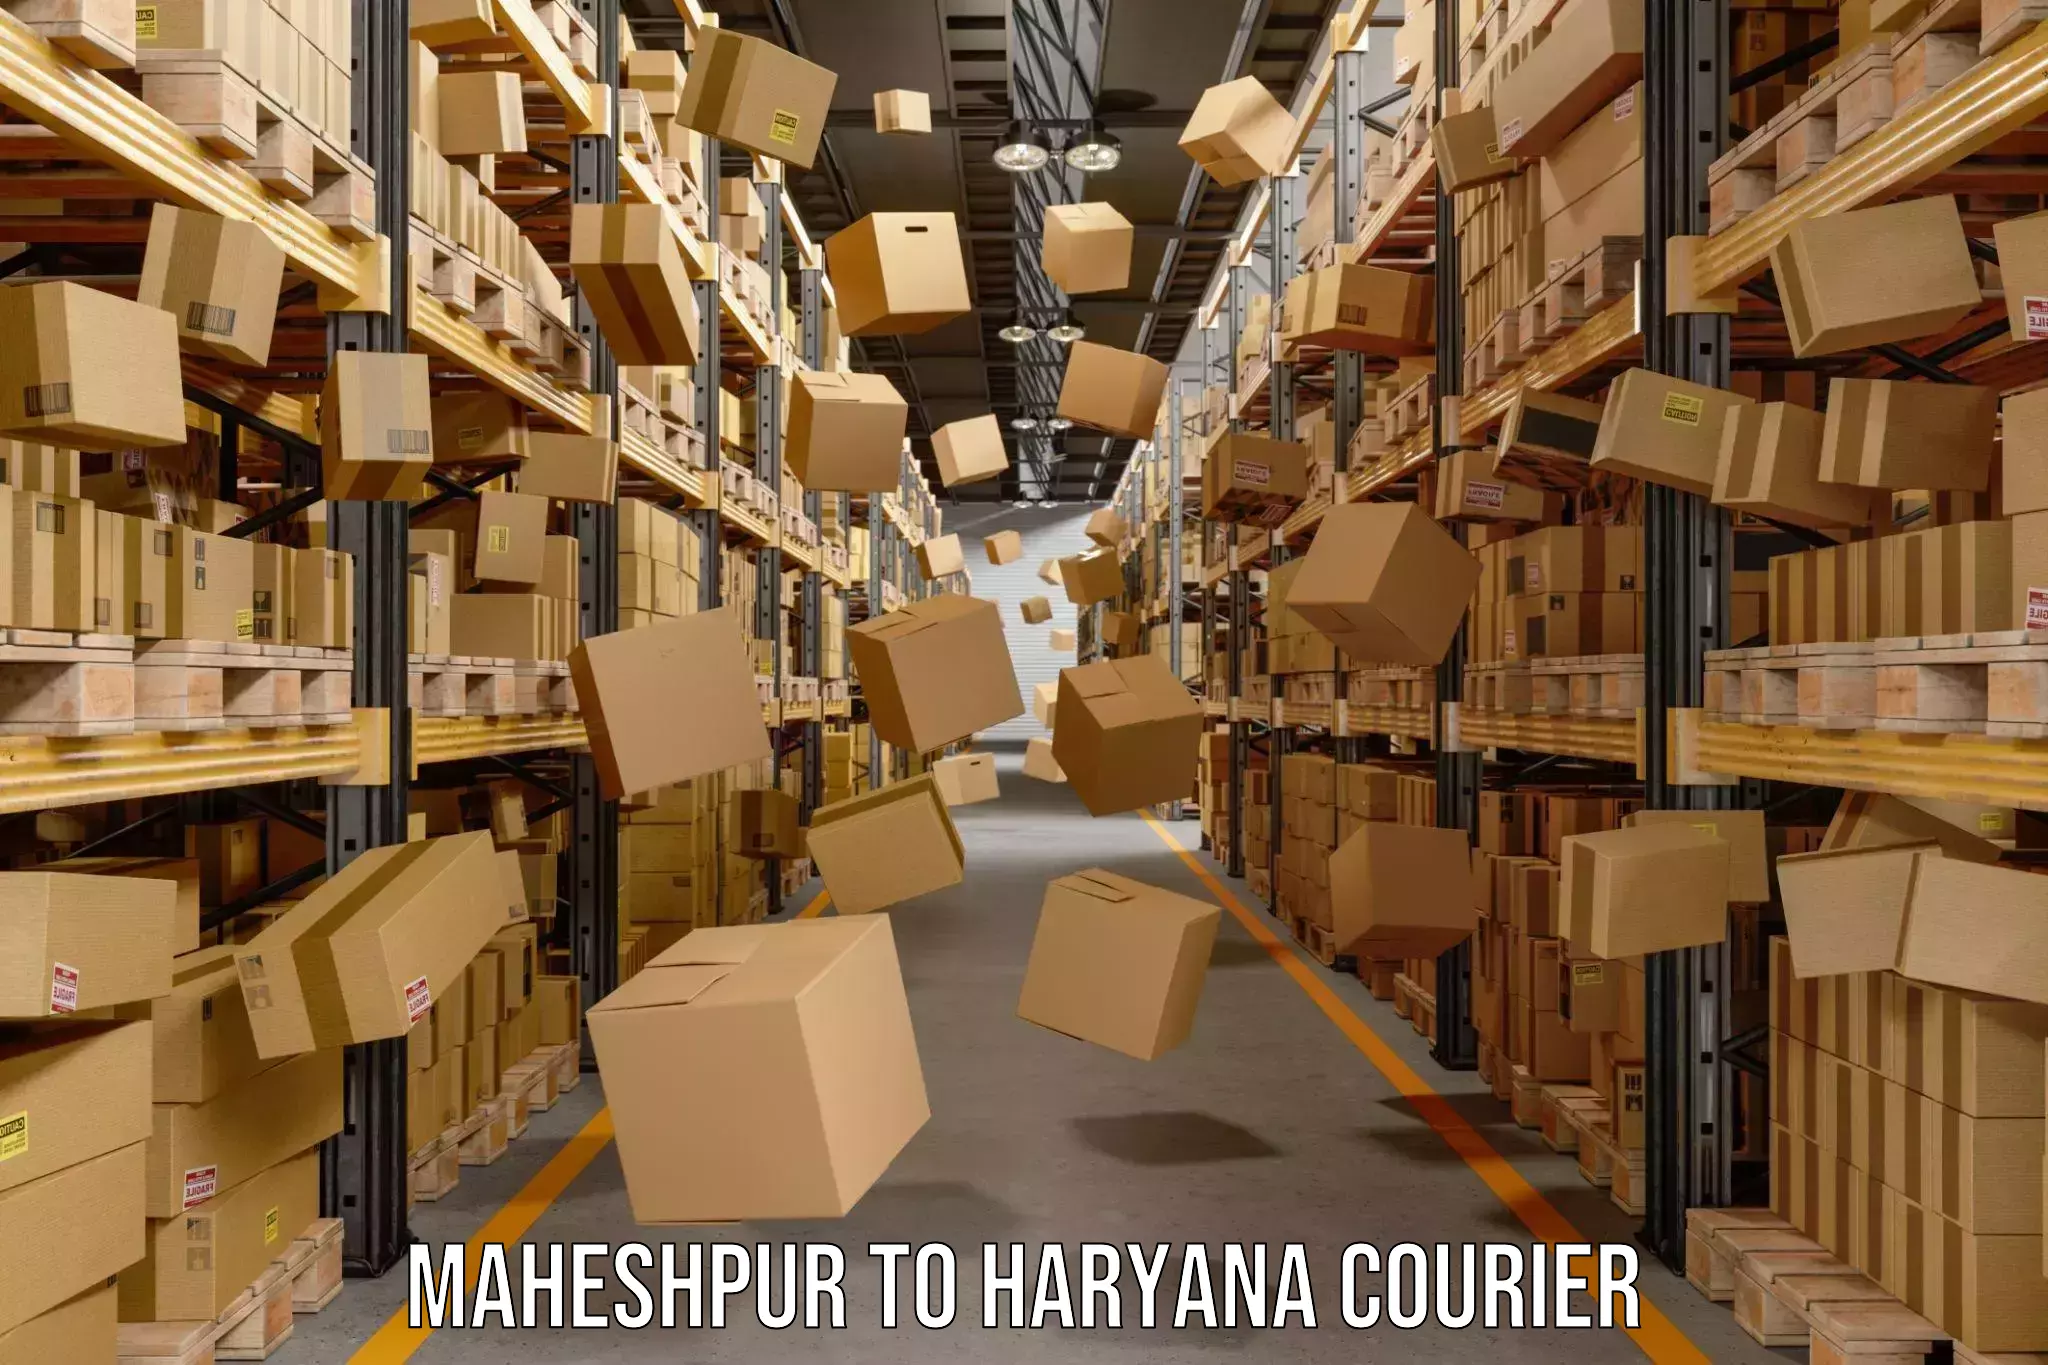 On-call courier service Maheshpur to Faridabad